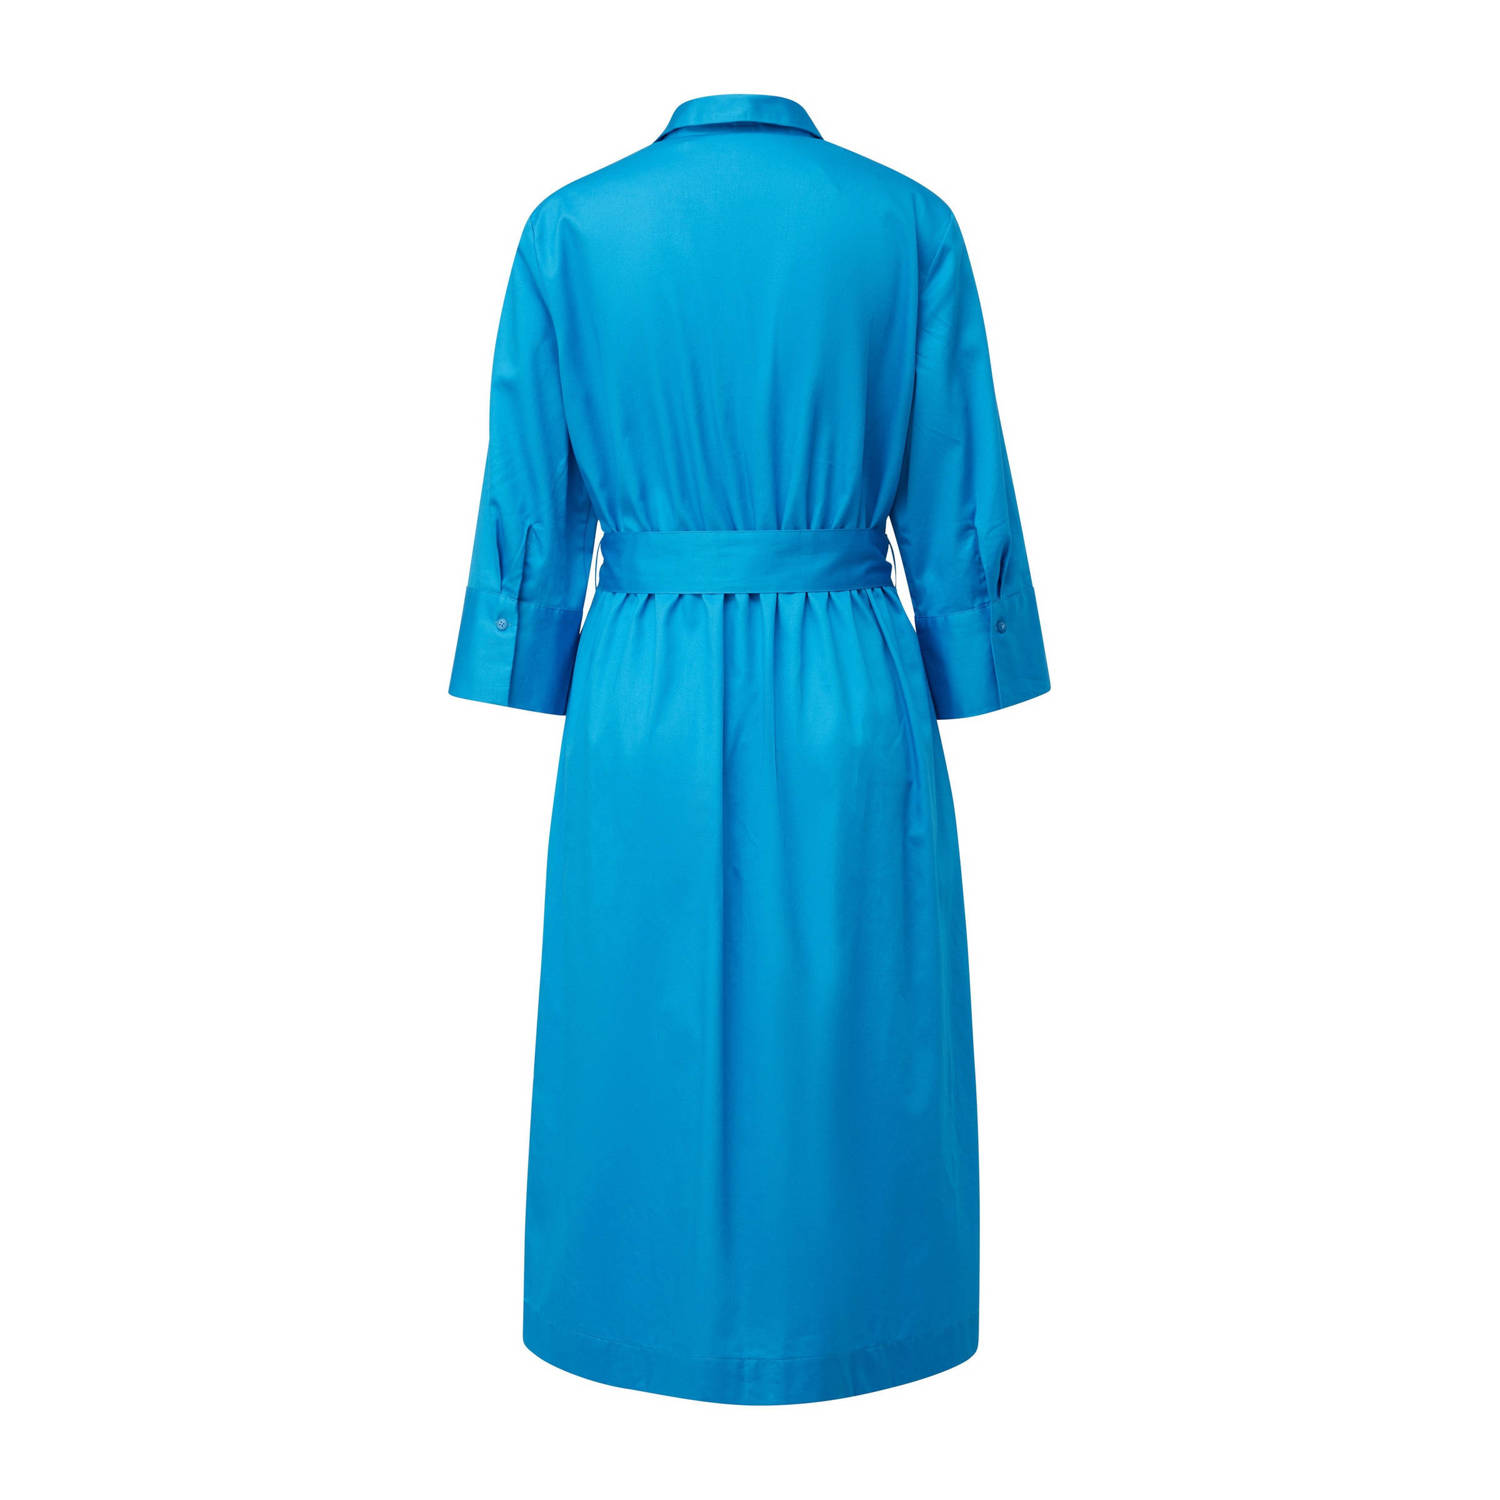 s.Oliver BLACK LABEL jurk blauw